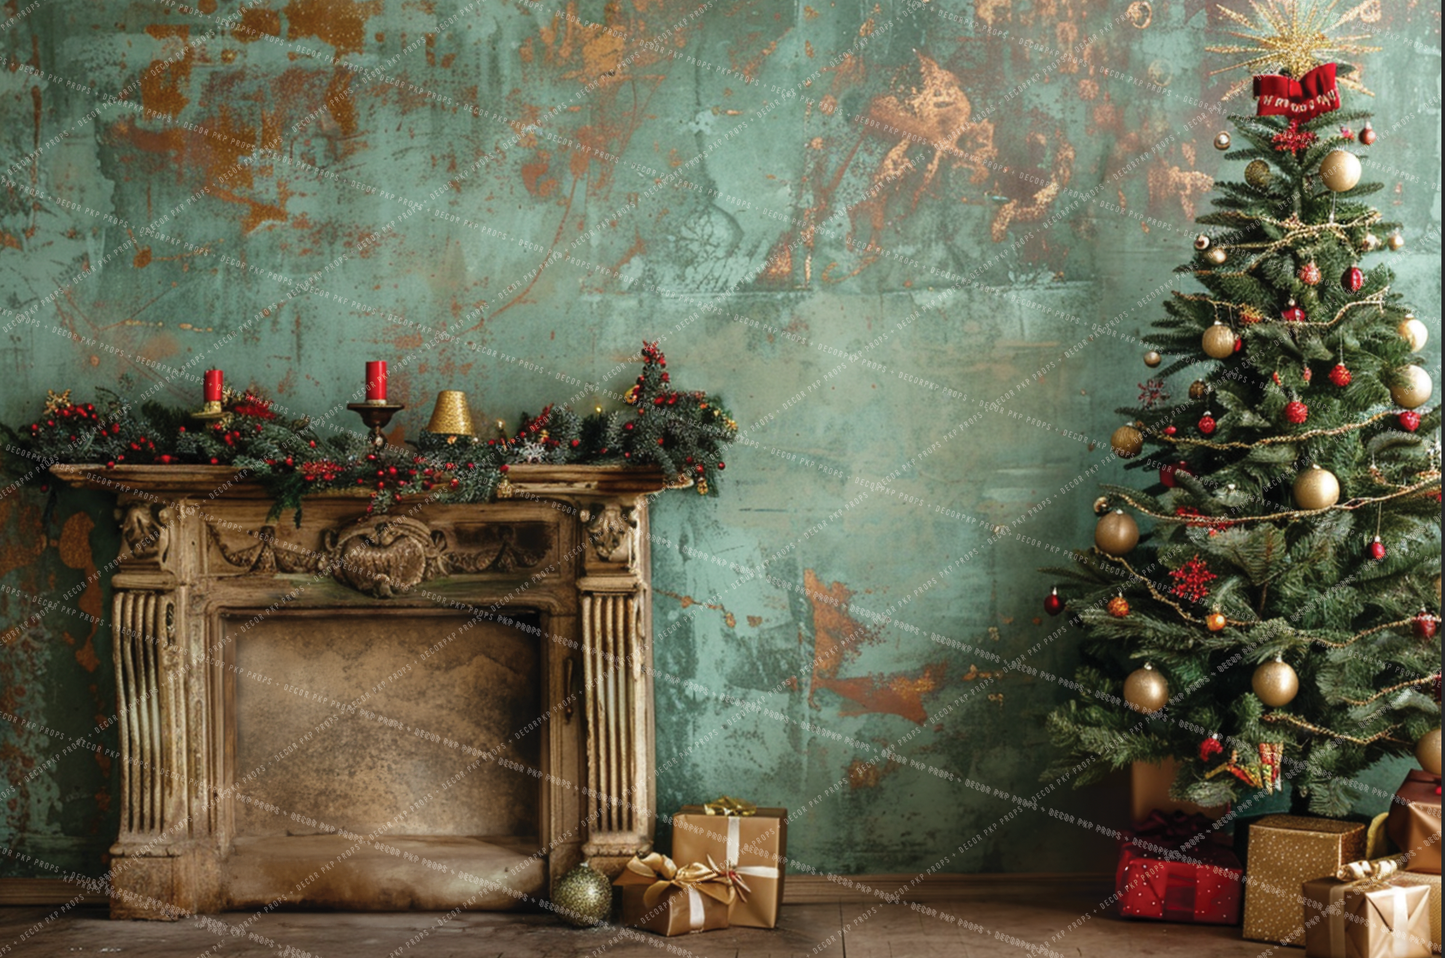 The Forgotten Christmas Fireplace - VH